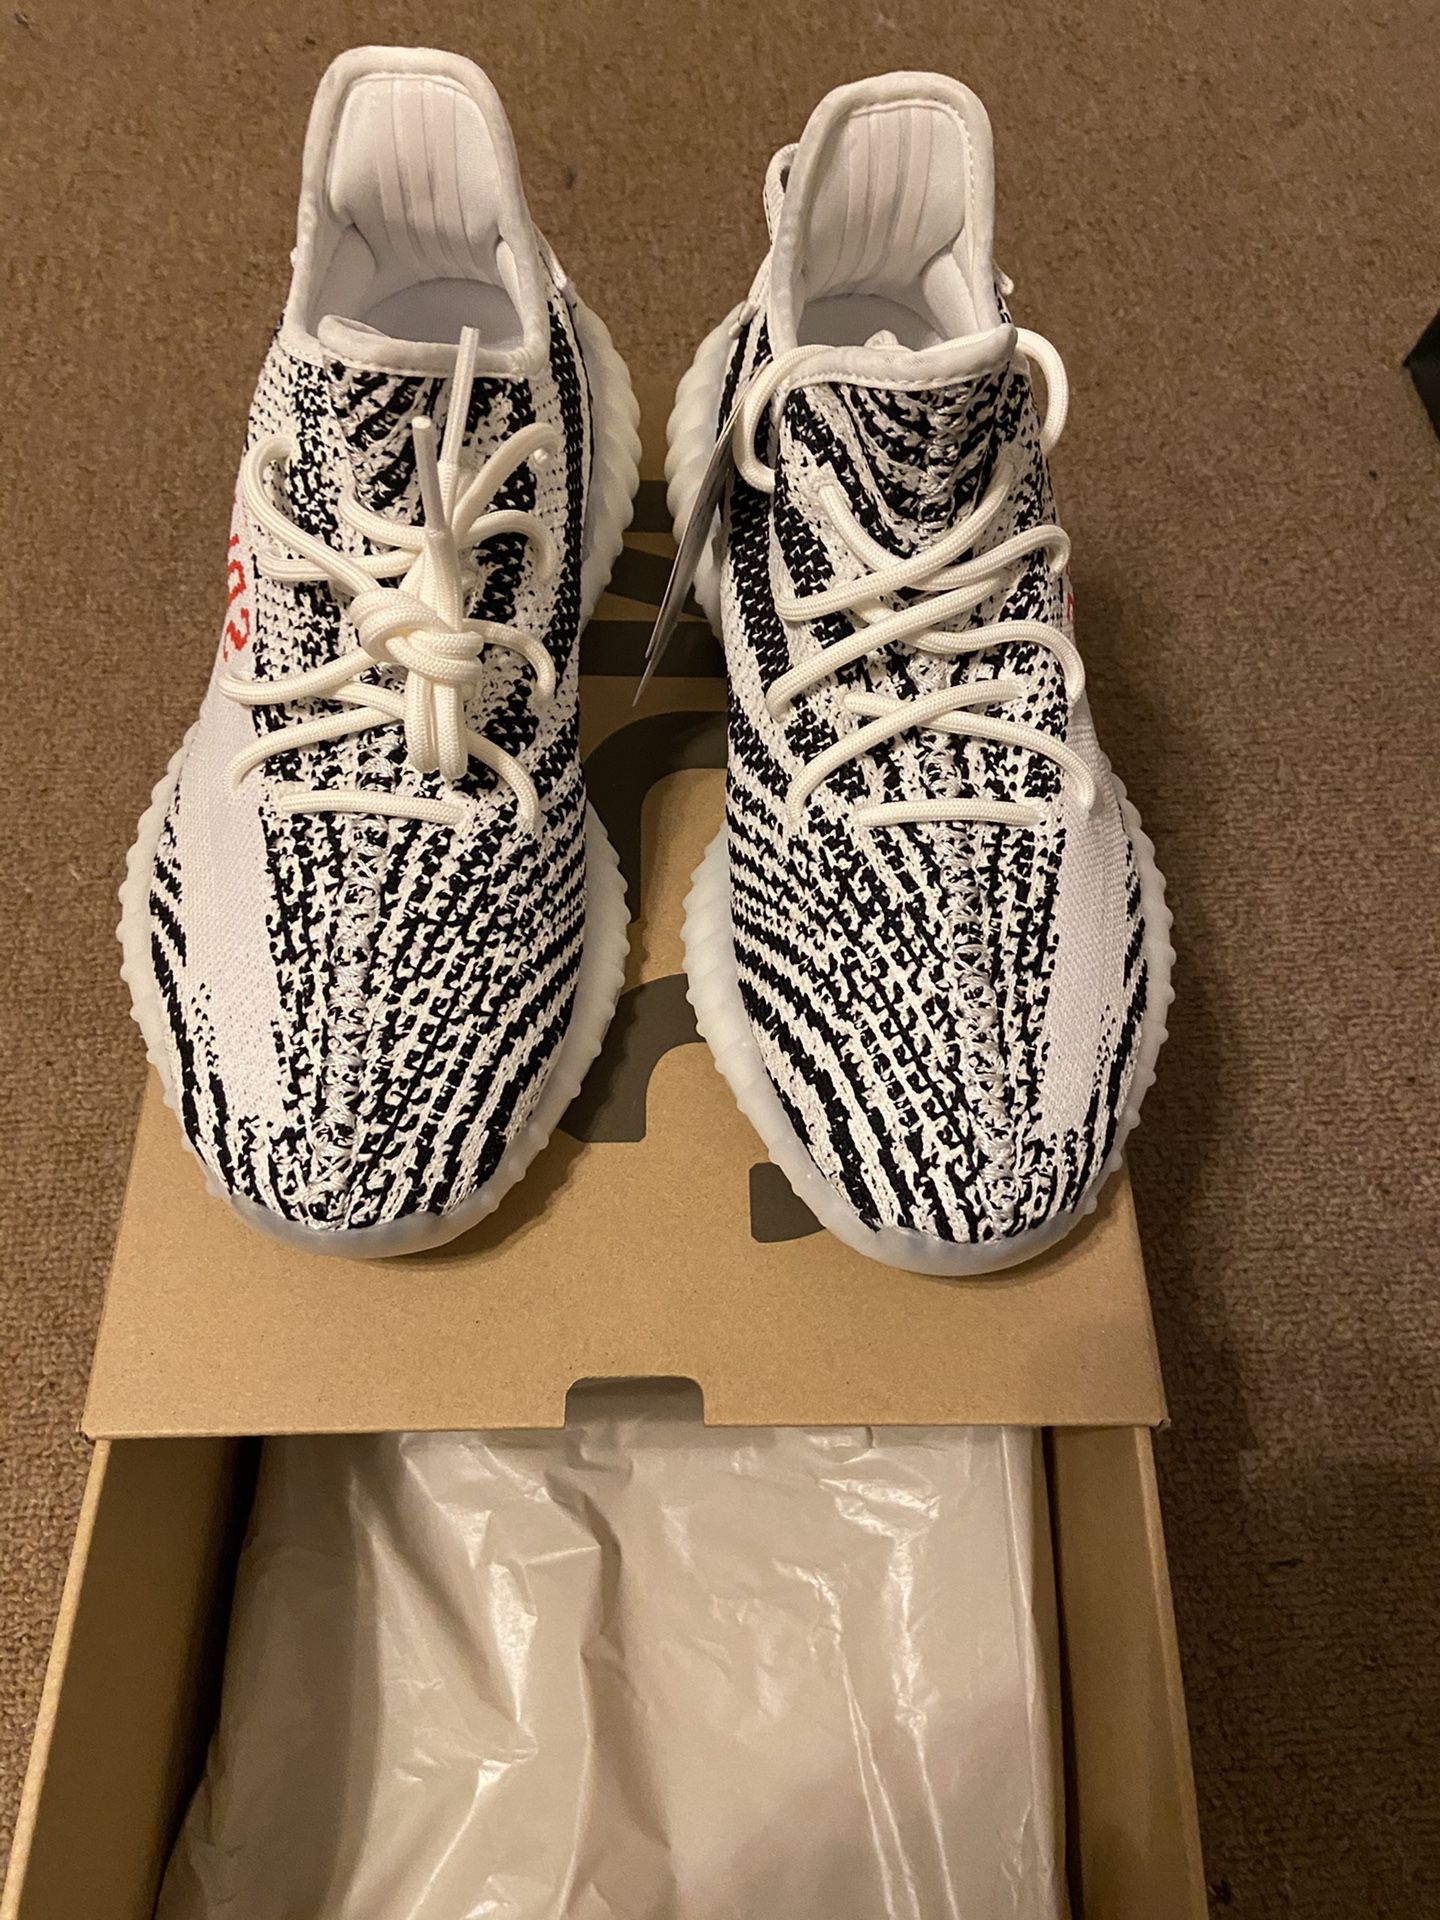 Yeezy zebras Adidas supreme Nike Jordan